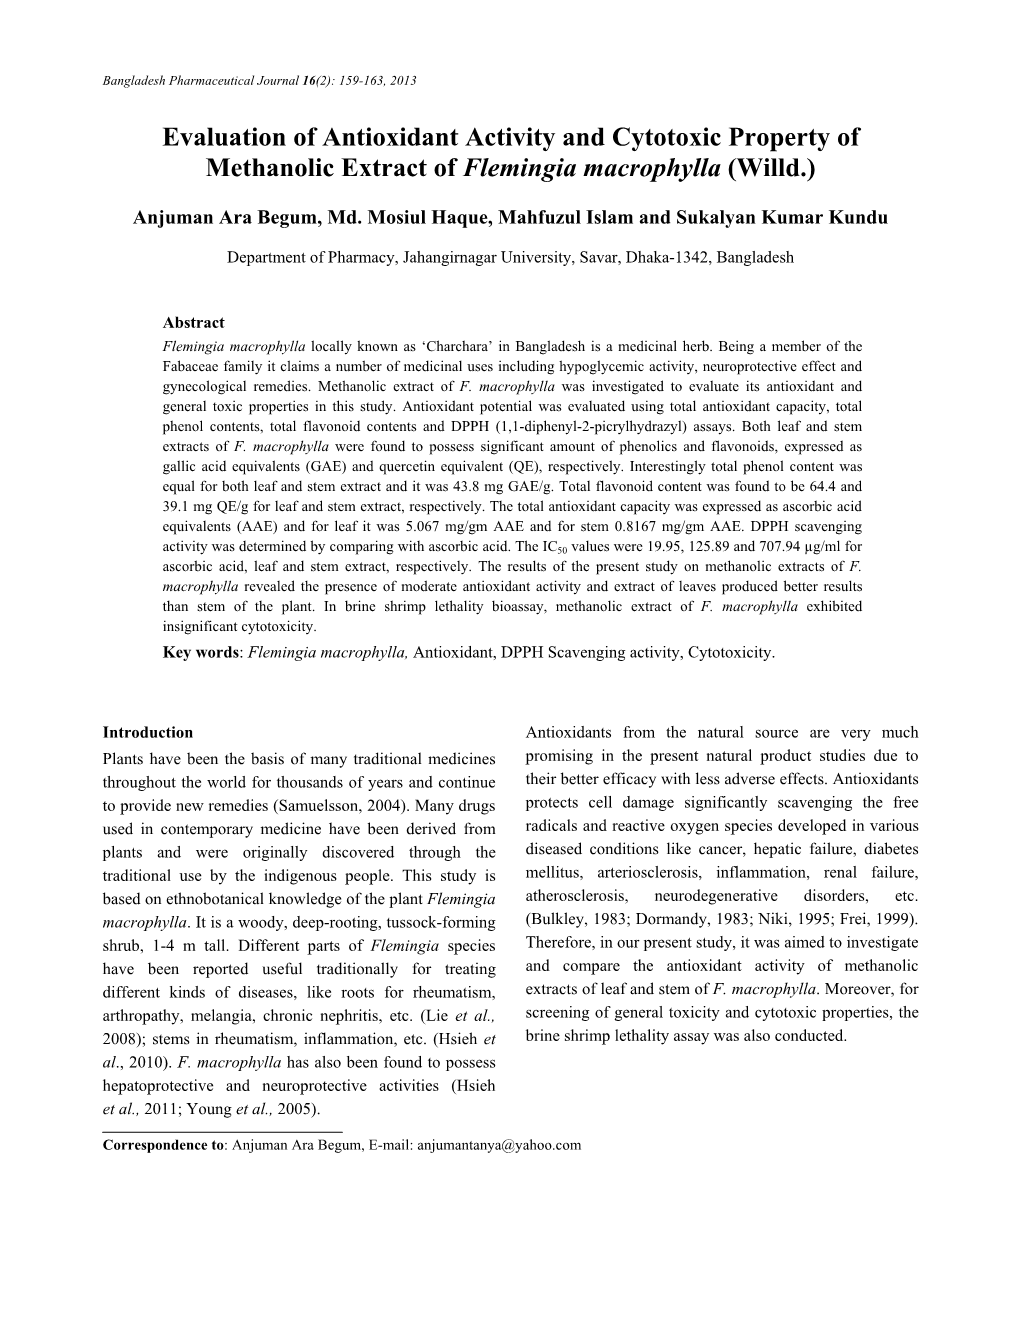 Evaluation of Antioxidant Activity and Cytotoxic Property of Methanolic Extract of Flemingia Macrophylla (Willd.)